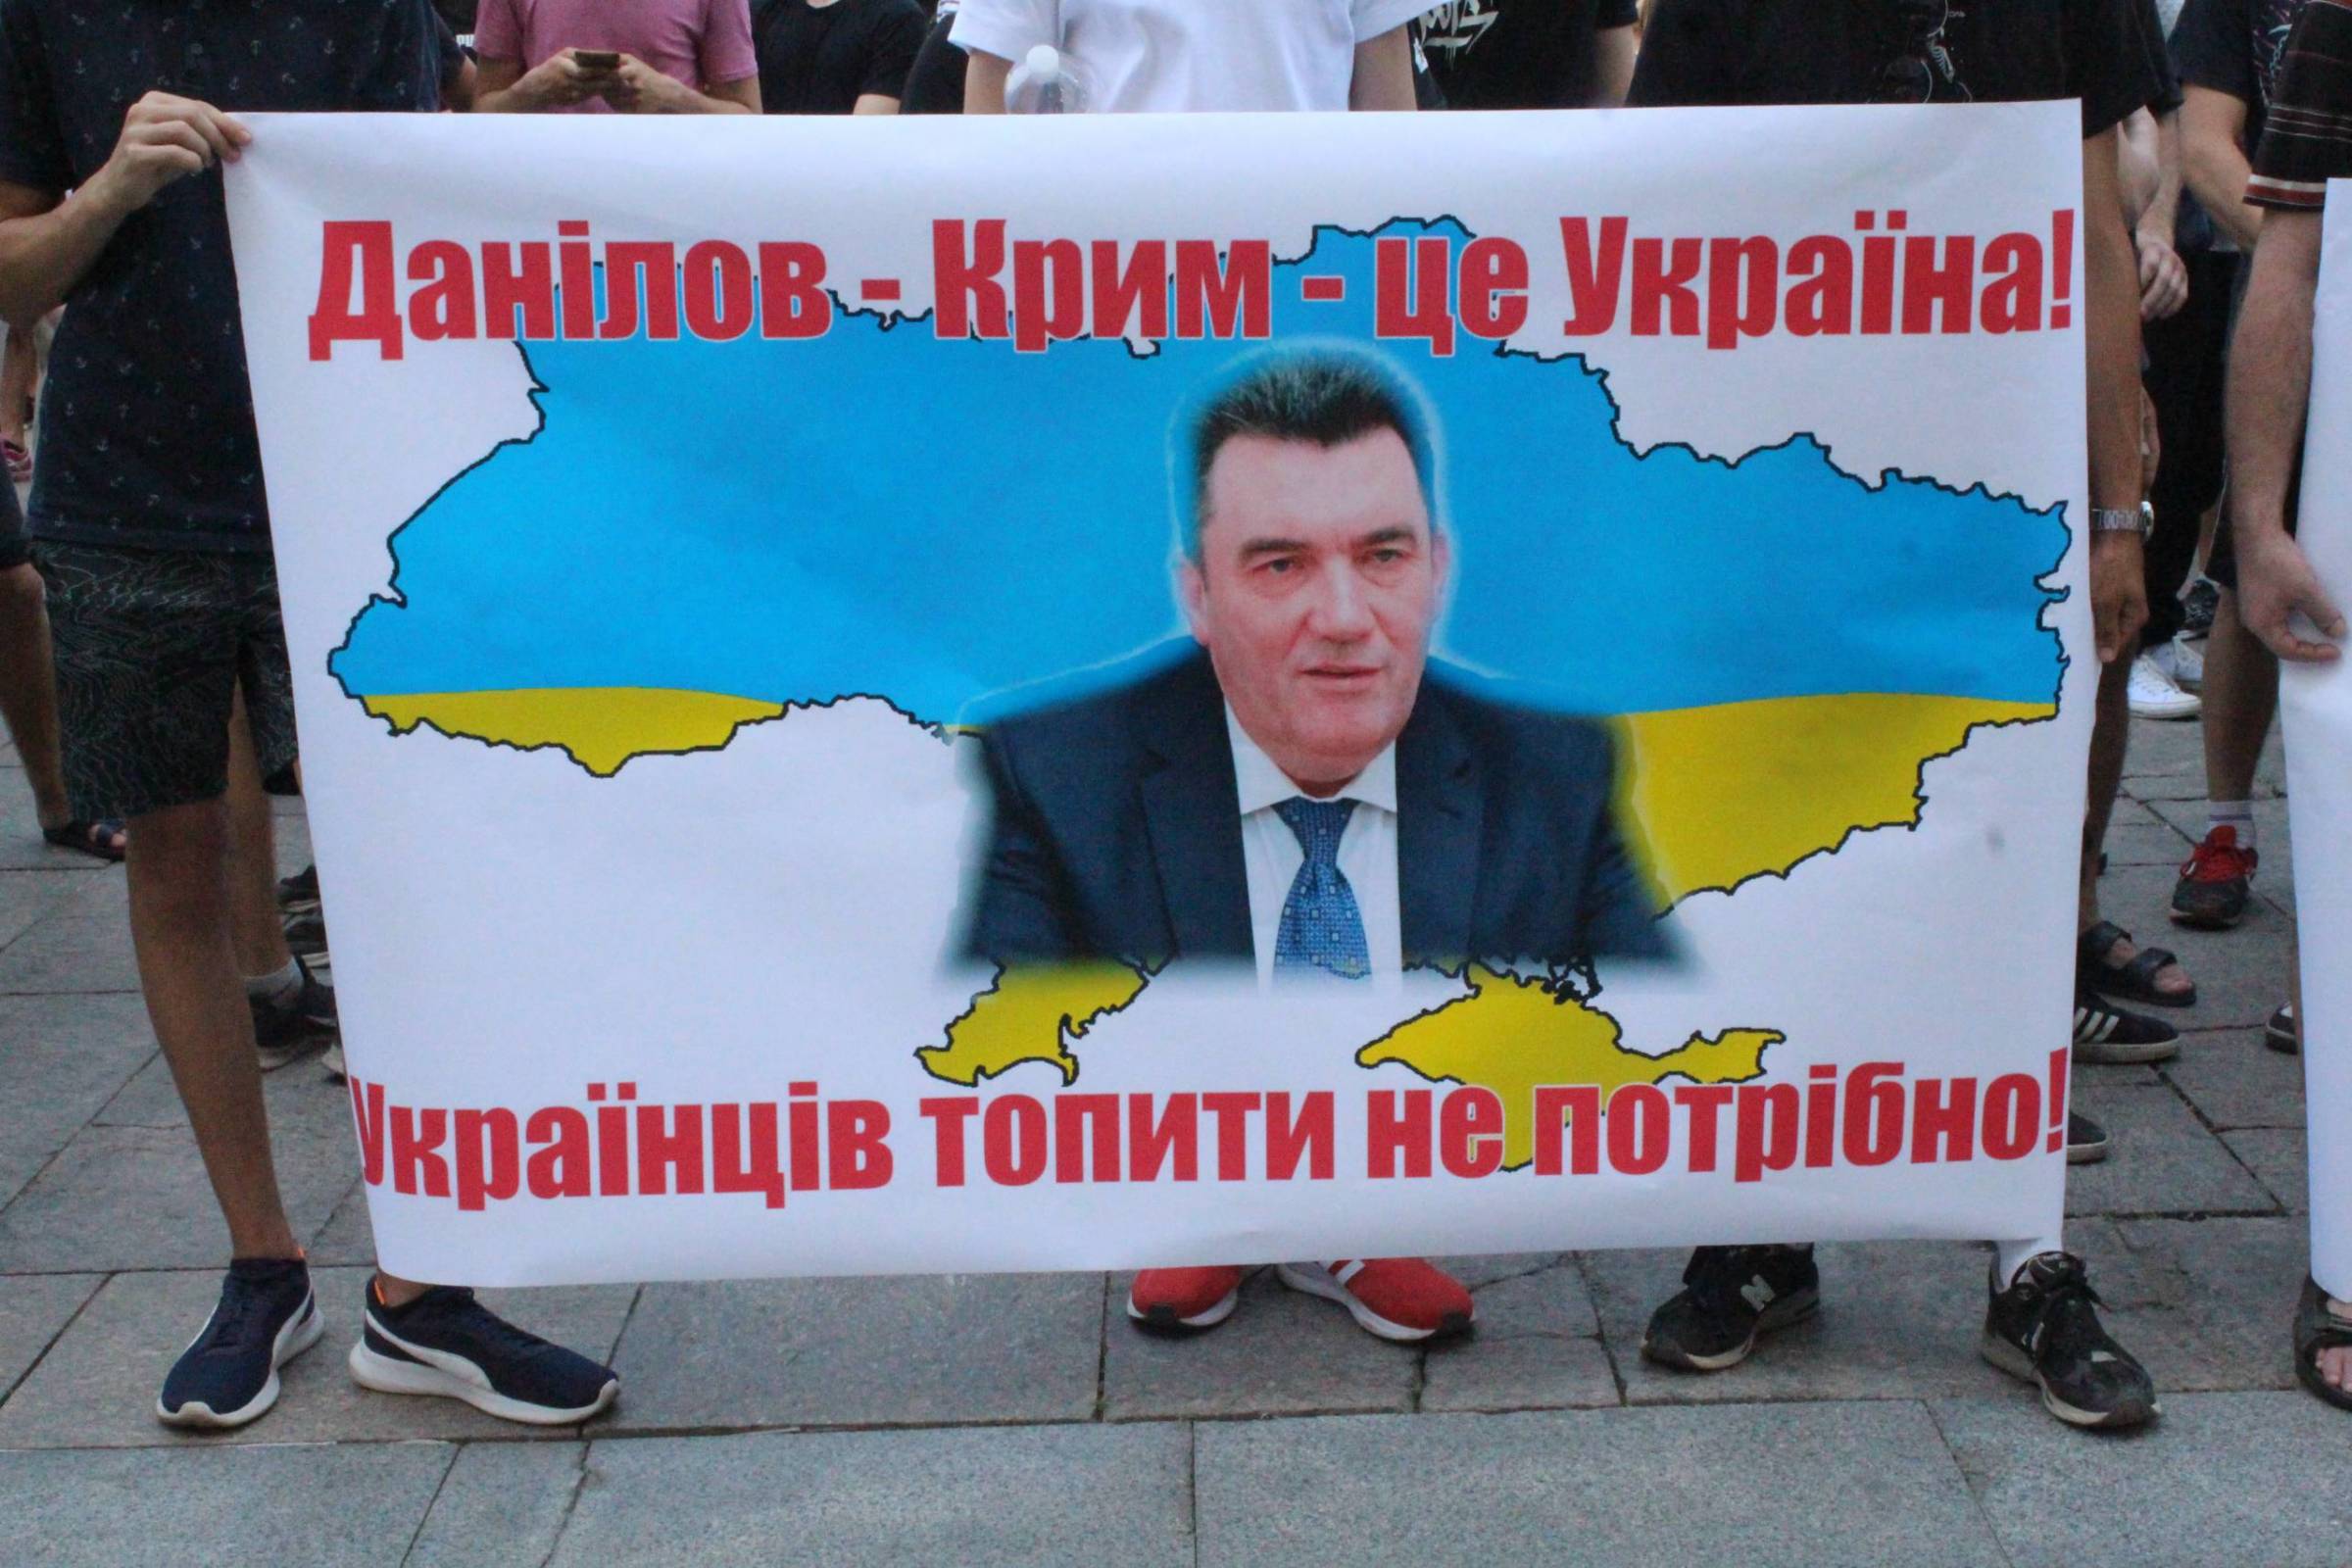 Митинг под стенами ОП: почему активисты требуют у президента отставки Данилова (ФОТО, ВИДЕО) - фото 2